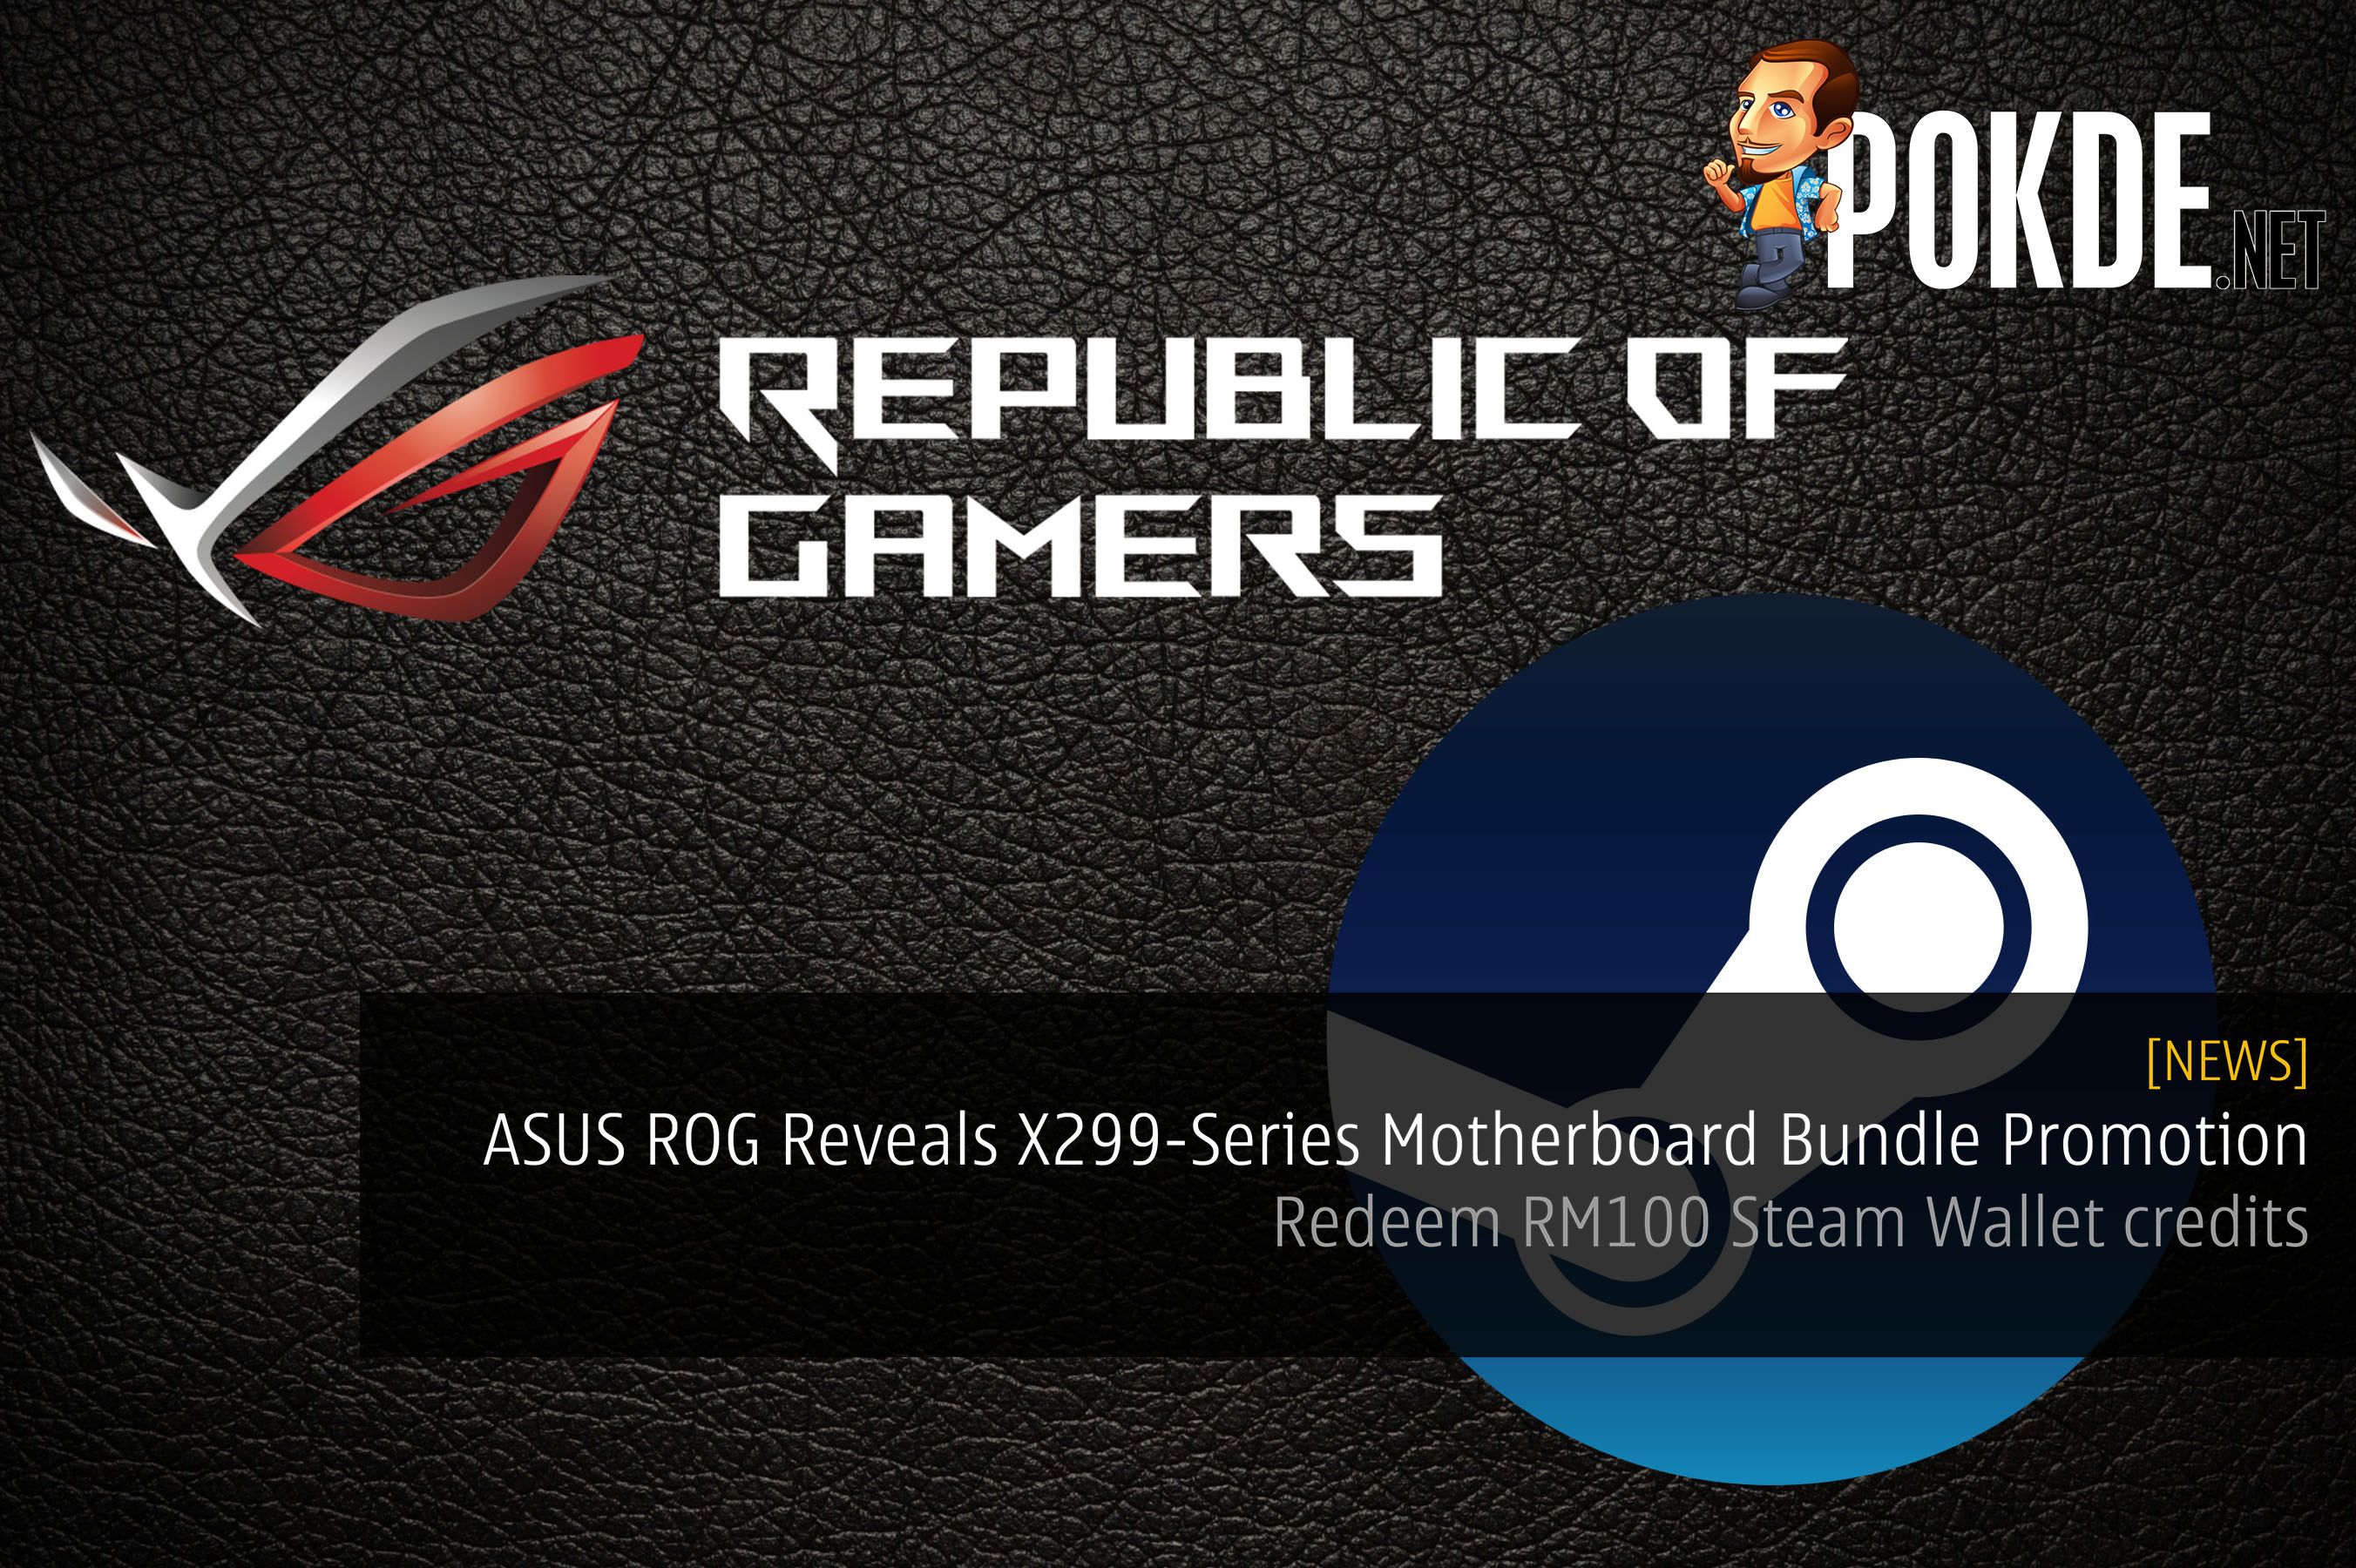 ASUS ROG Reveals X299 Motherboard Series Bundle Promotion - Redeem RM100 Steam Wallet credits 31